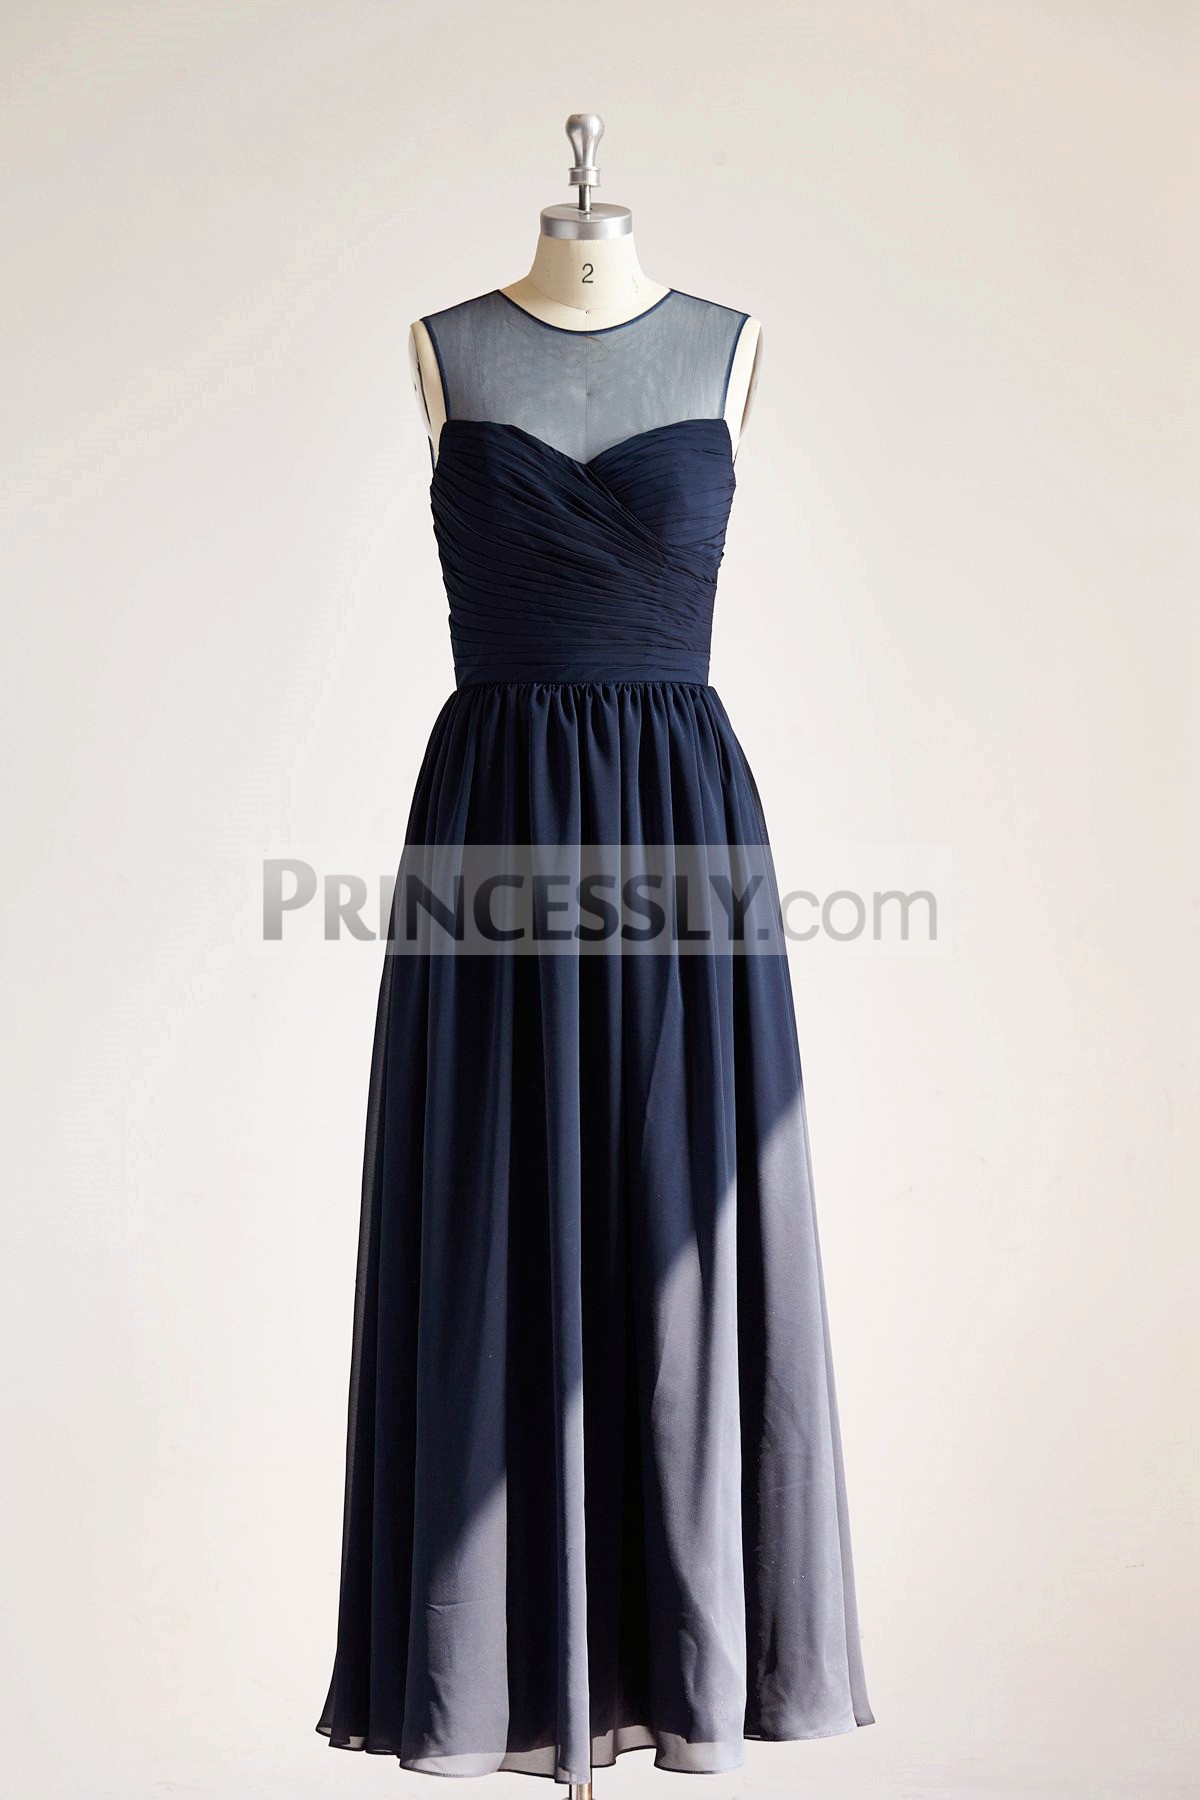 Princessly.com-K1000293-Sheer Illusion Neck Navy Blue Chiffon Tulle Long Wedding Bridesmaid Dress-31